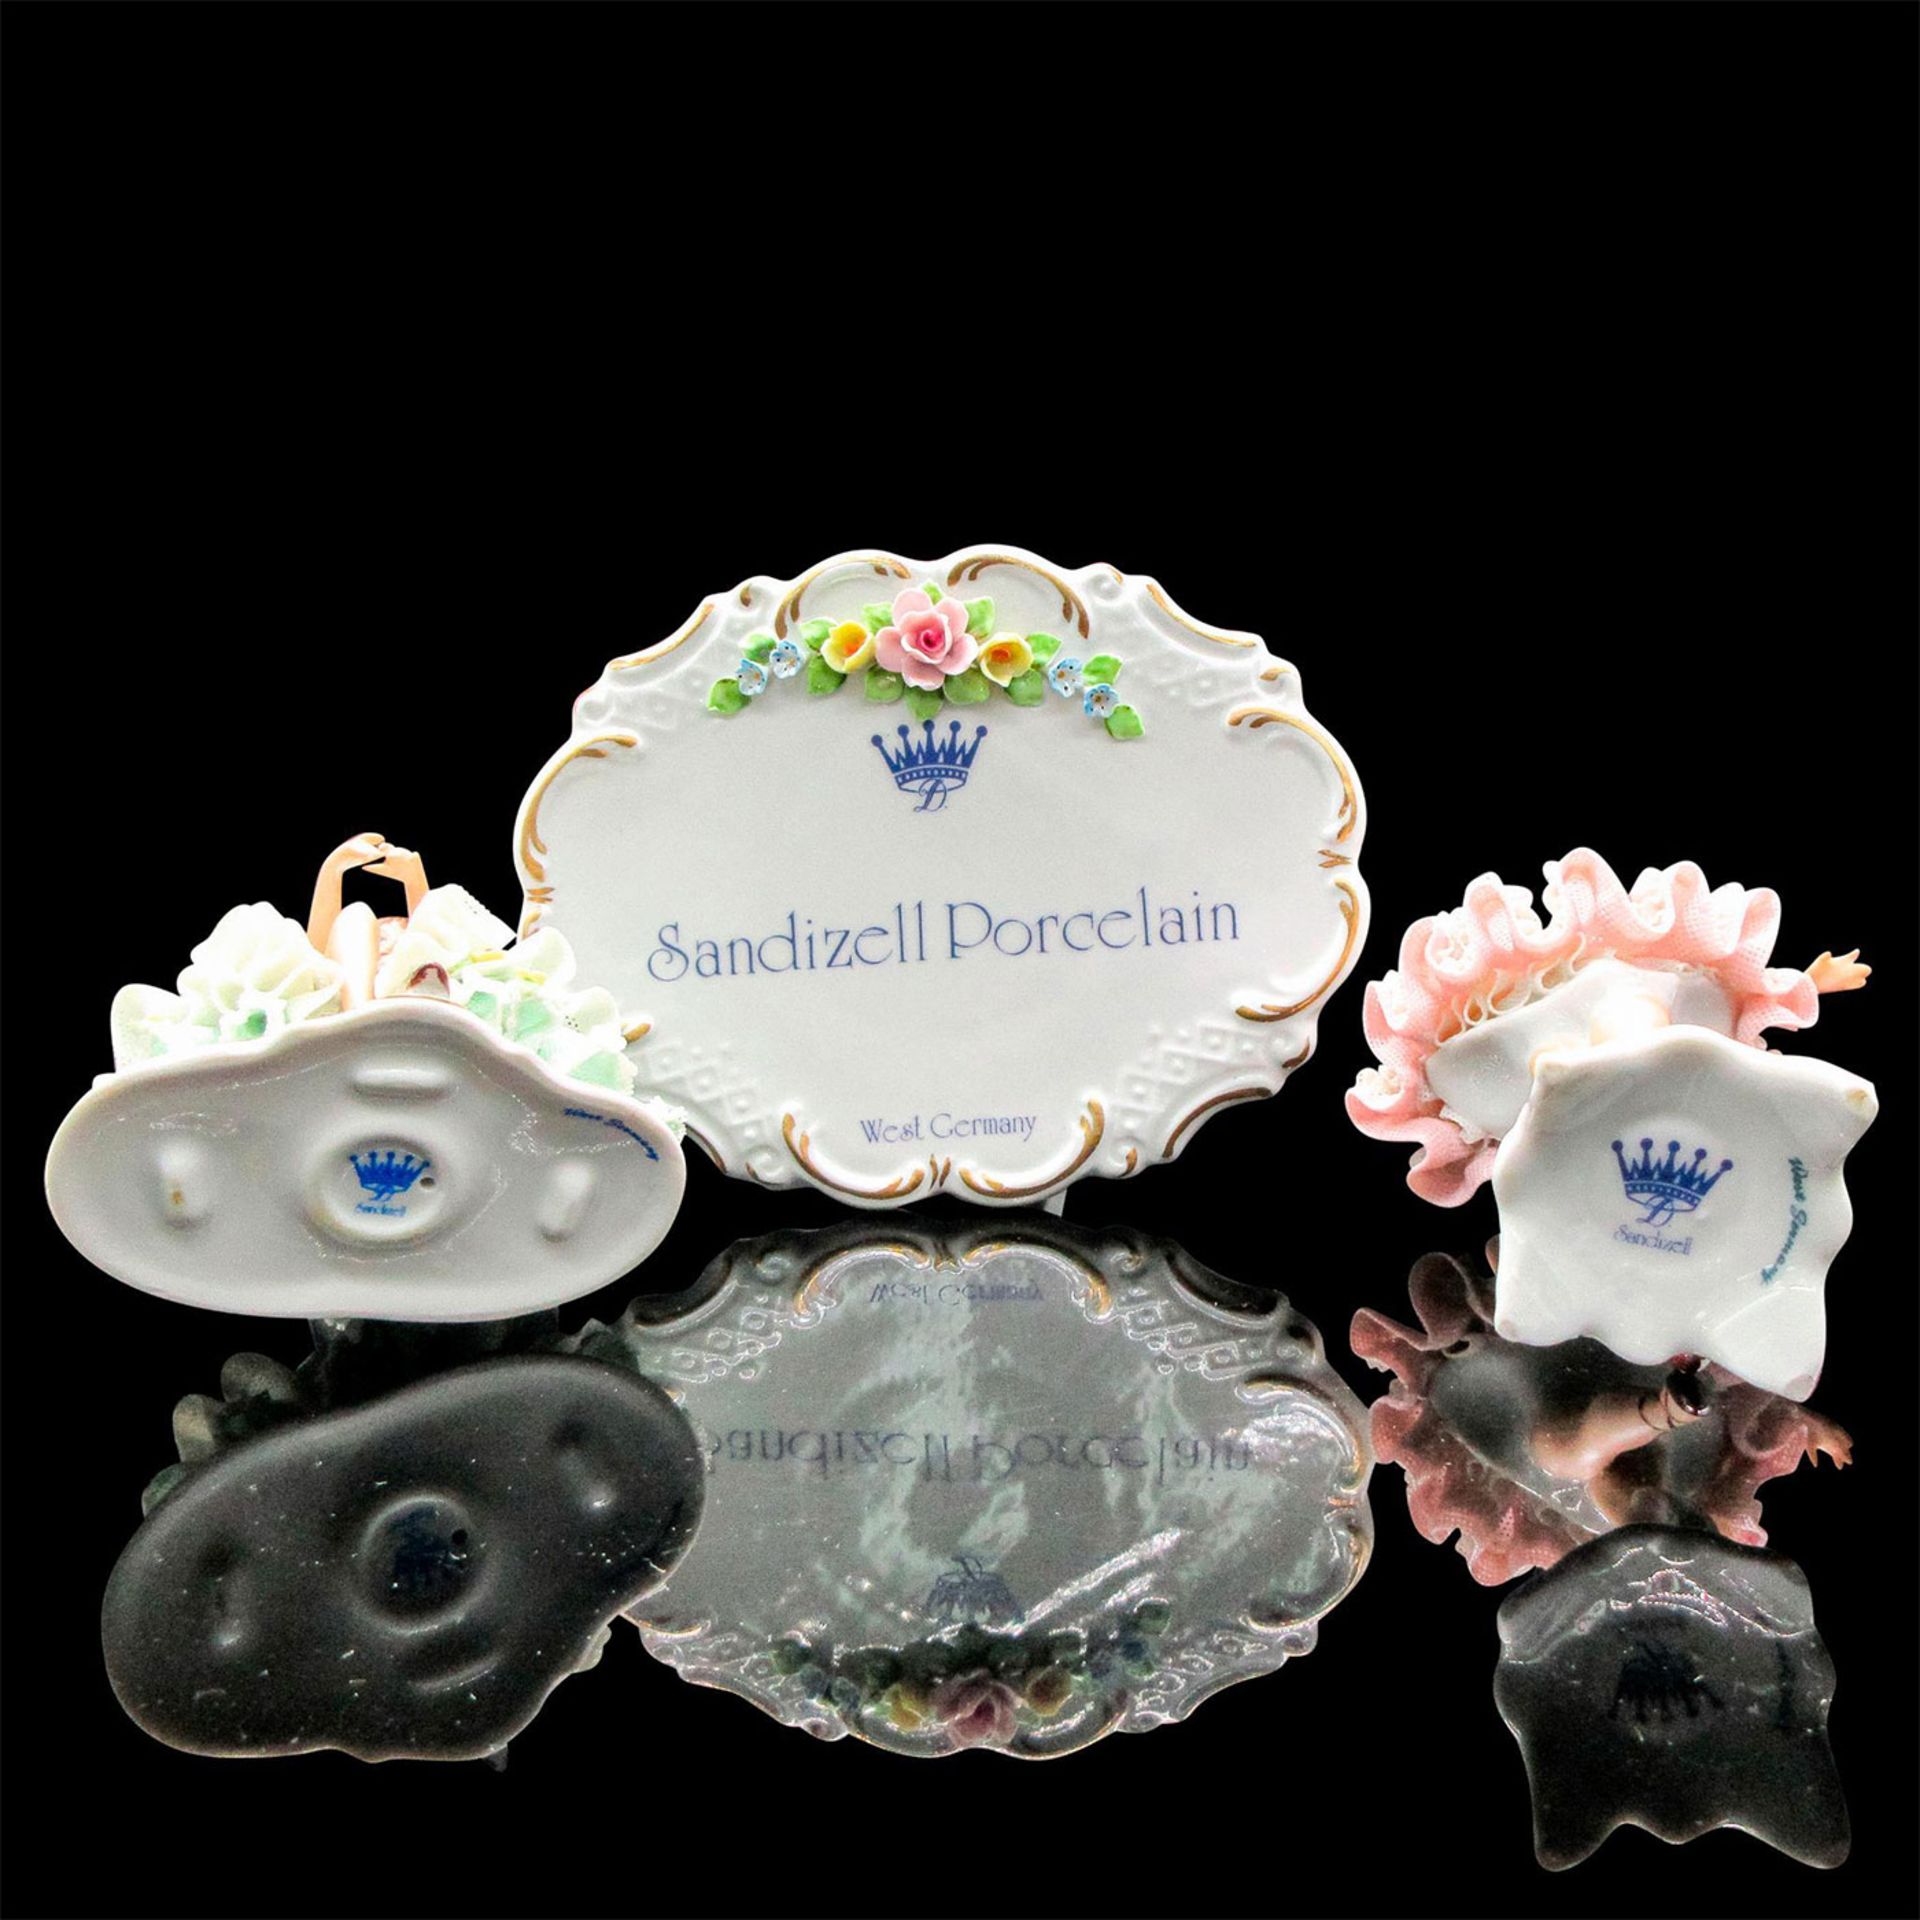 3pc Sandizell Porcelain Figurines + Dispay Sign - Image 3 of 3